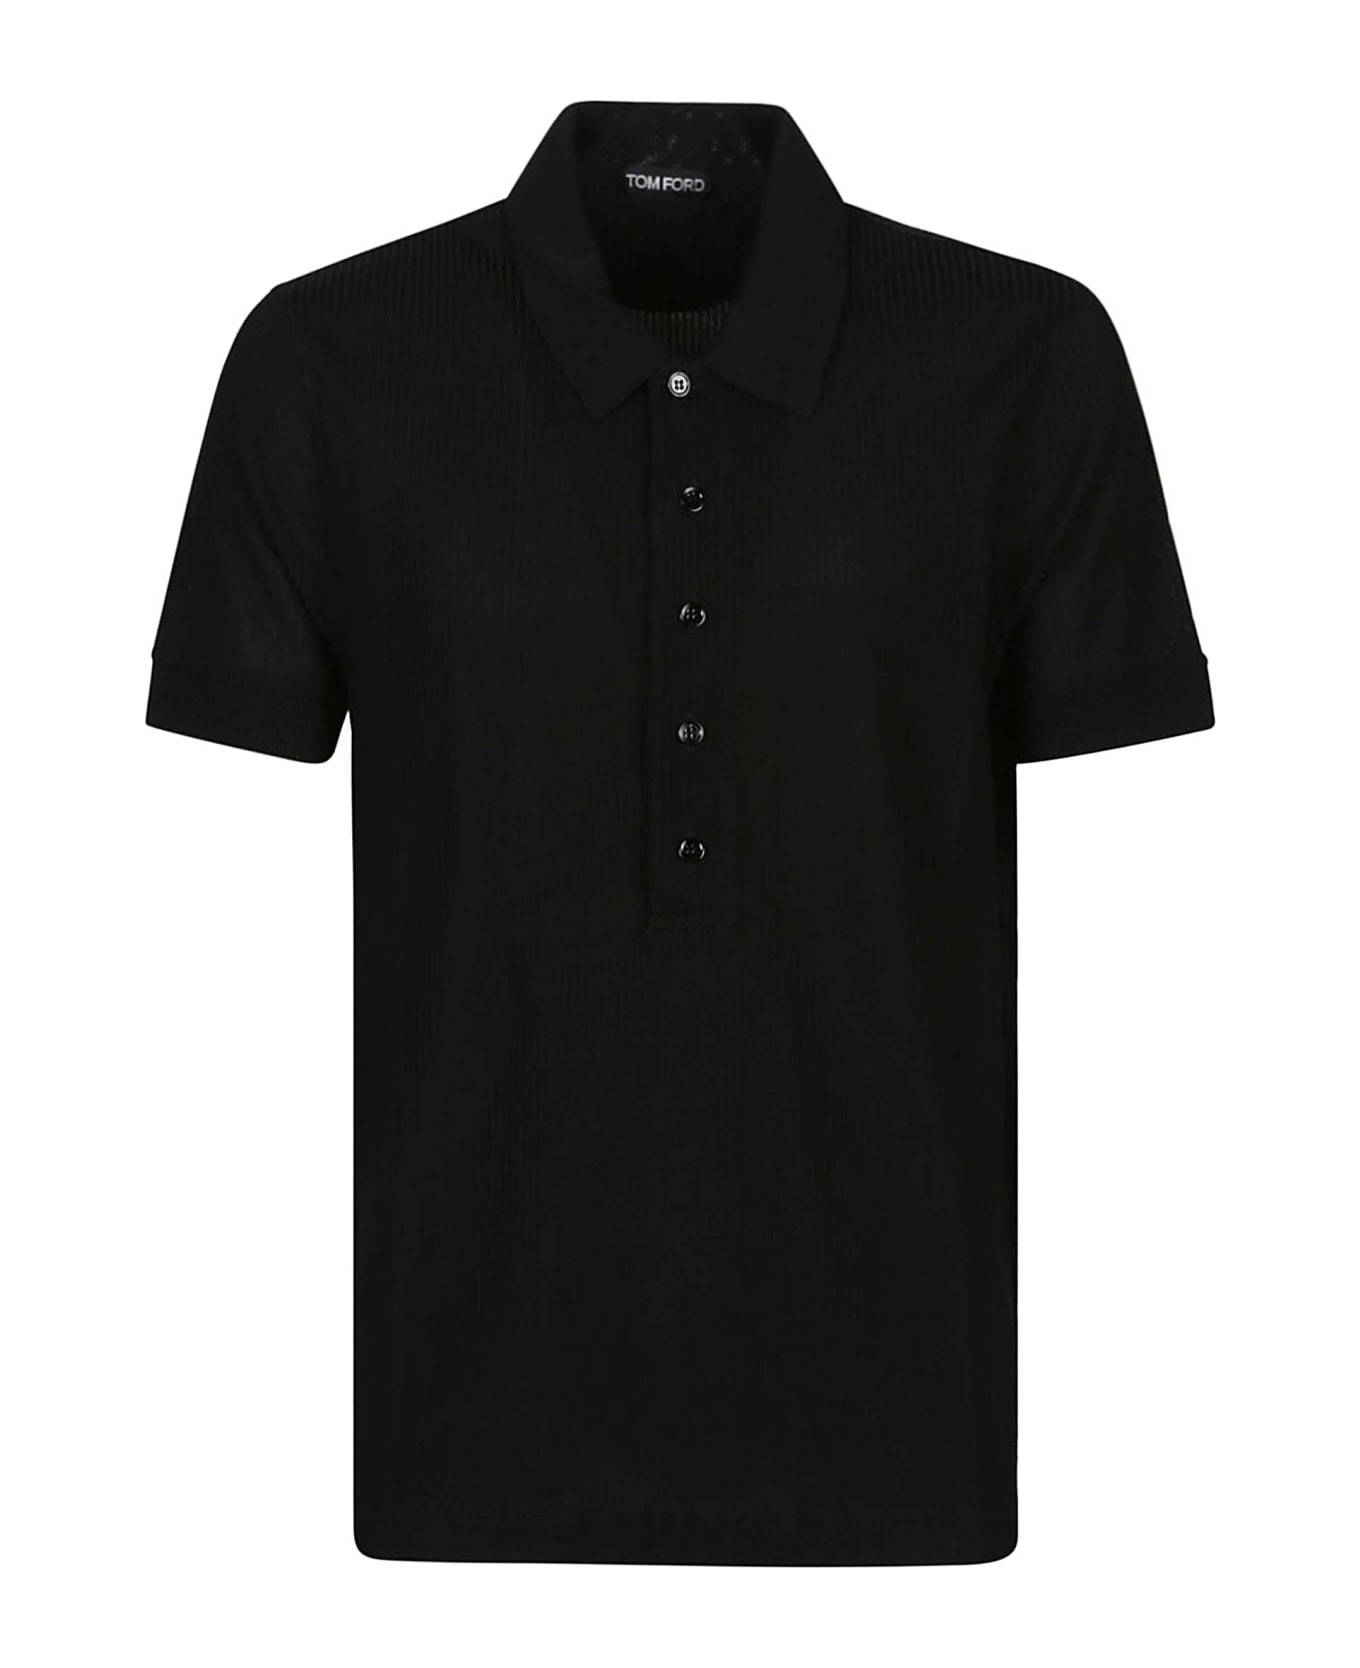 Tom Ford Short Sleeve Polo Shirt - Black